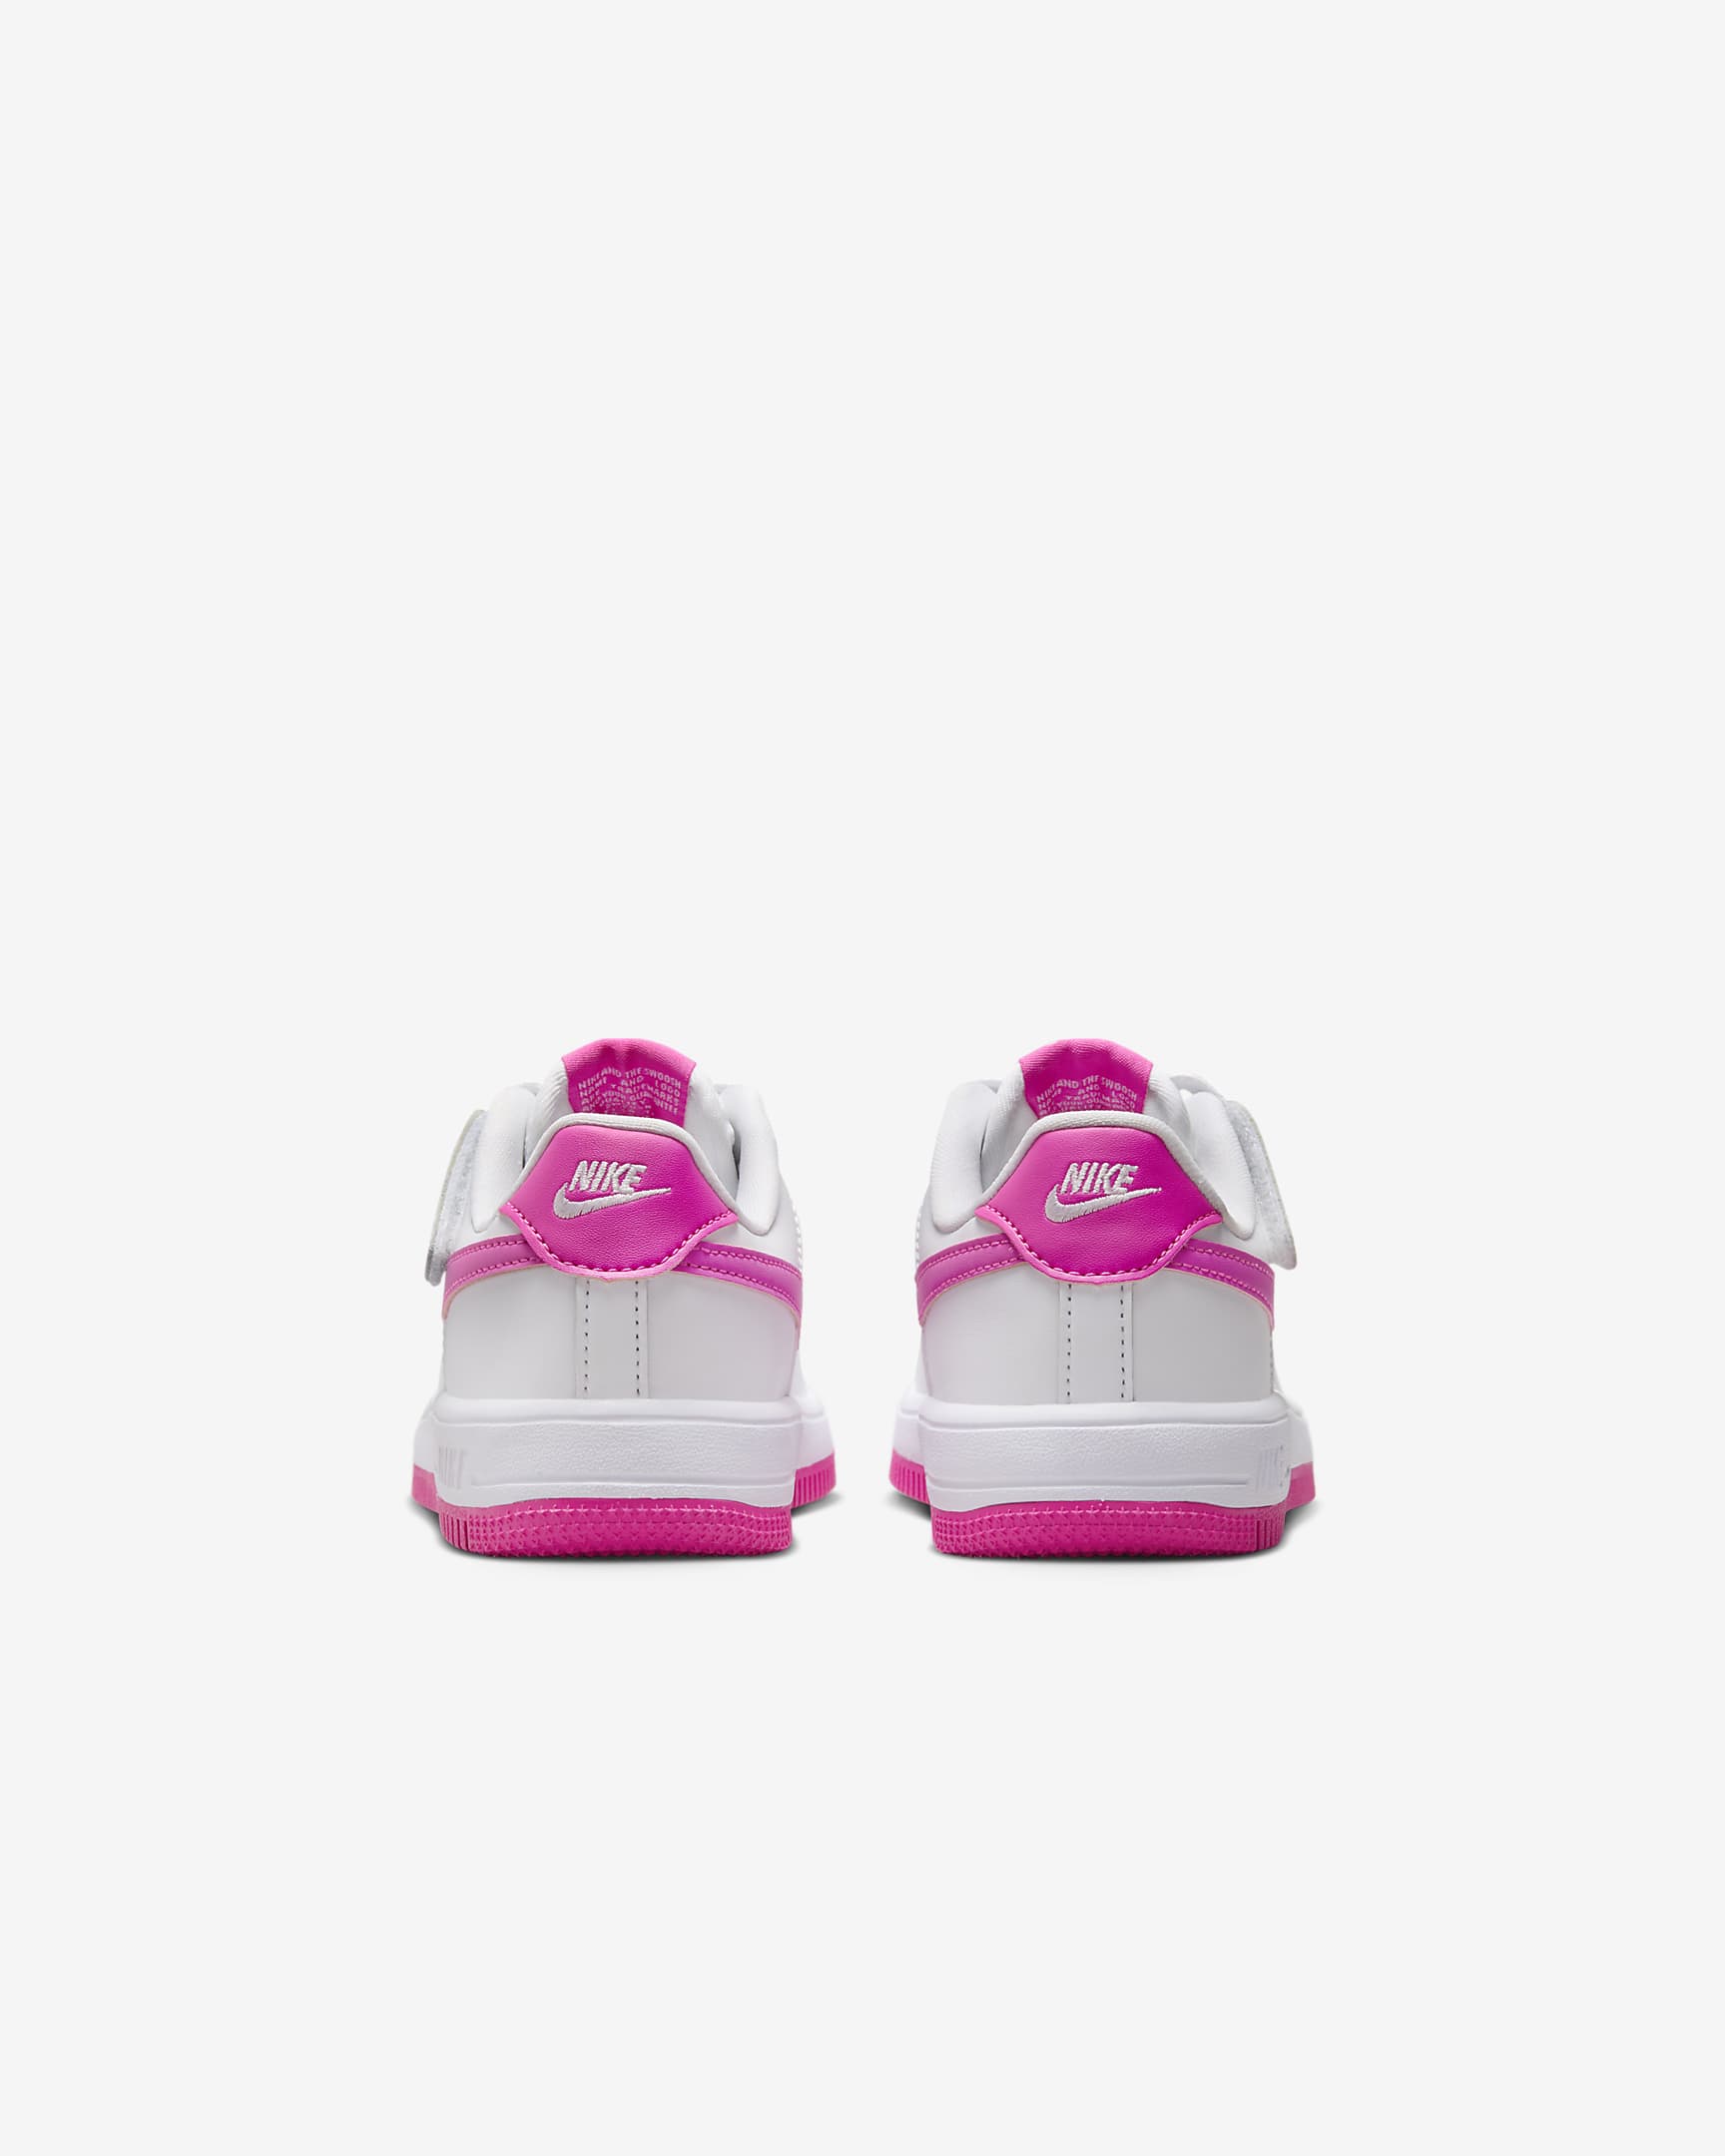 Nike Force 1 Low EasyOn Little Kids' Shoes - White/Laser Fuchsia